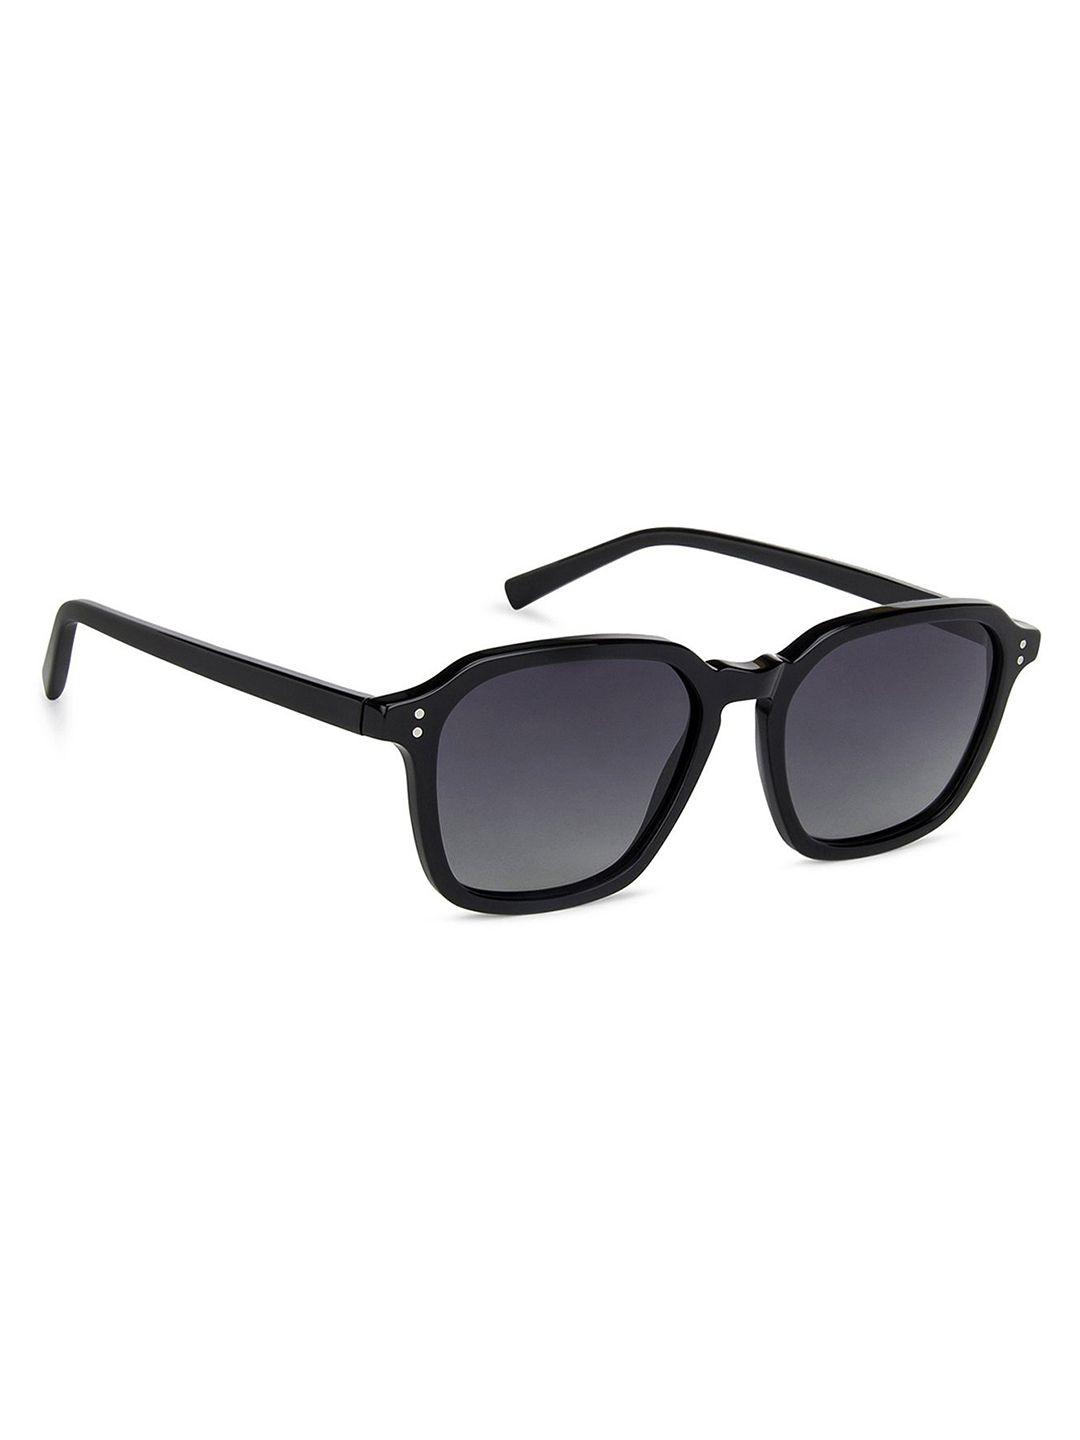 john jacobs unisex grey lens & black wayfarer sunglasses with polarised and uv protected lens